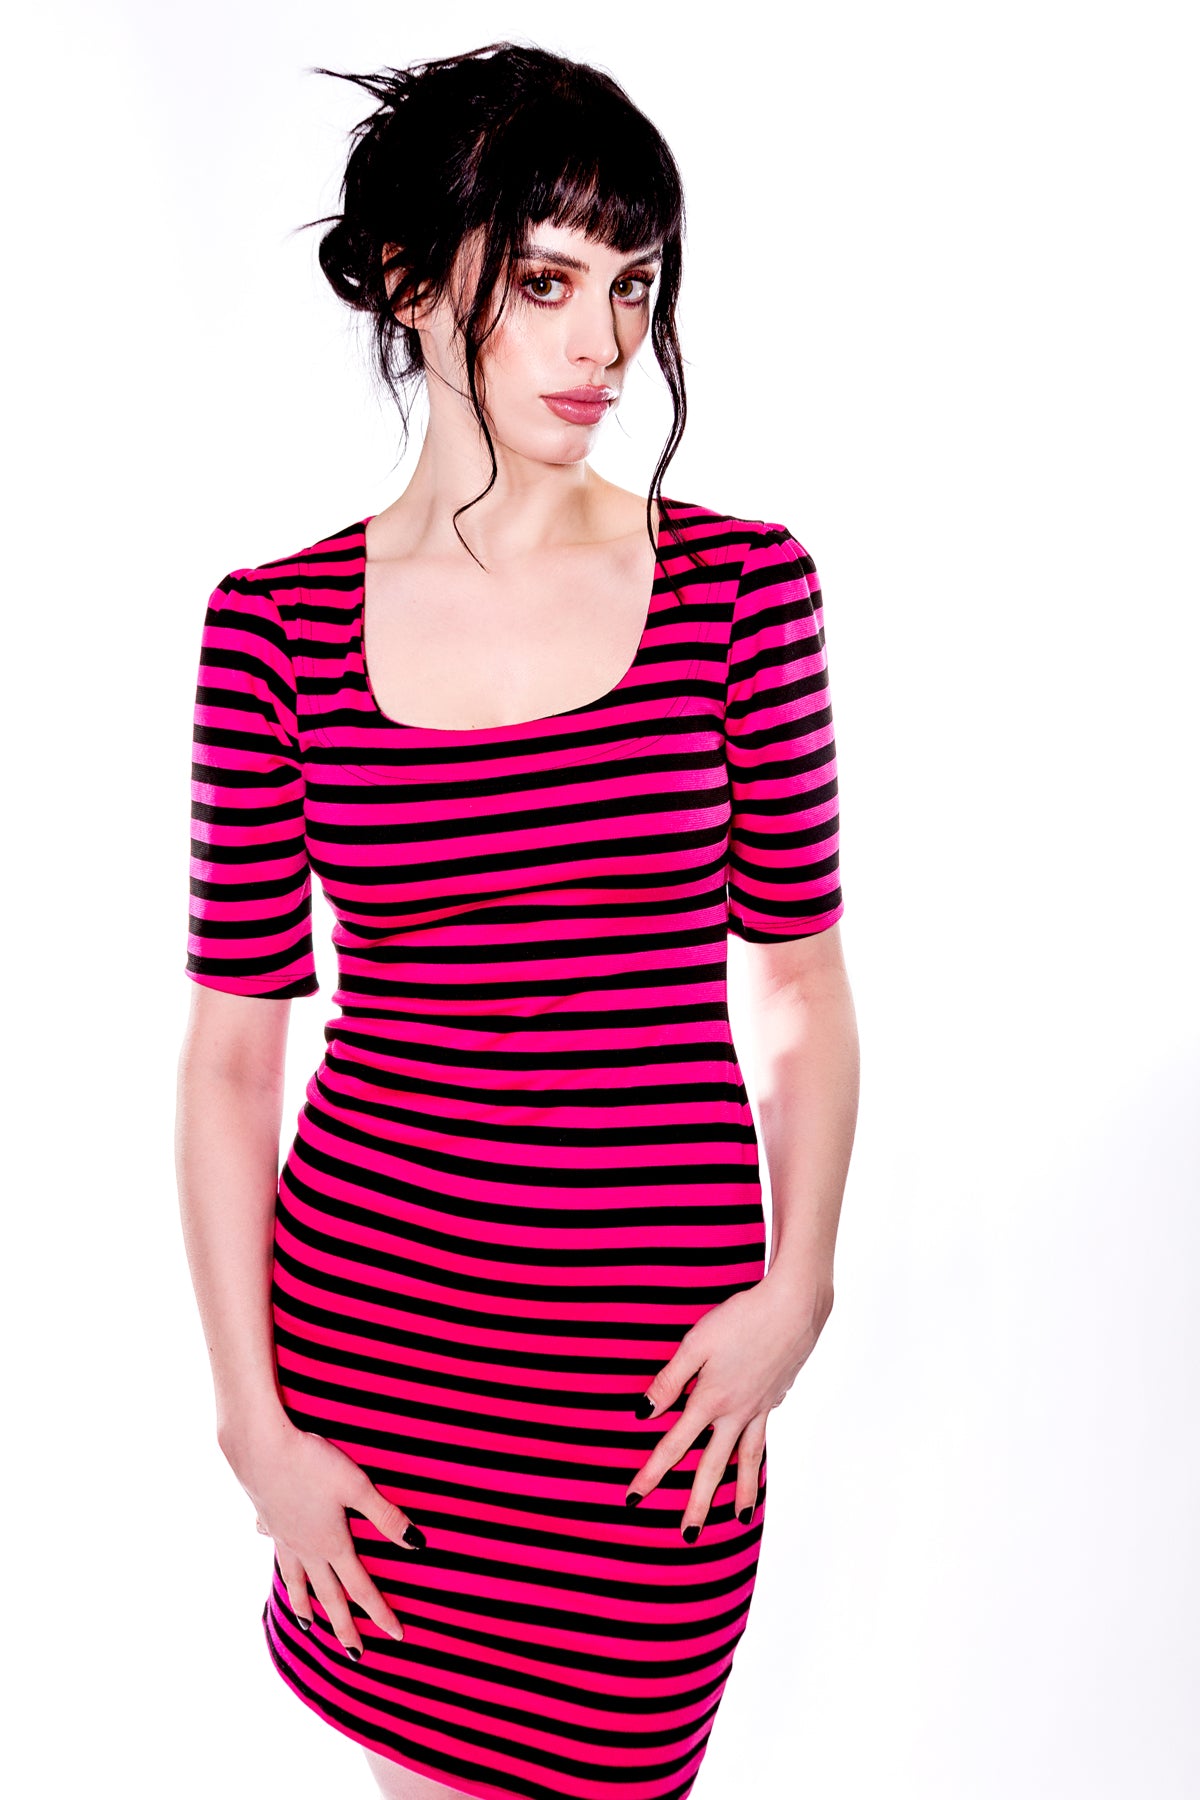 Back to basics Colored Striped Dress - shopjessicalouise.com